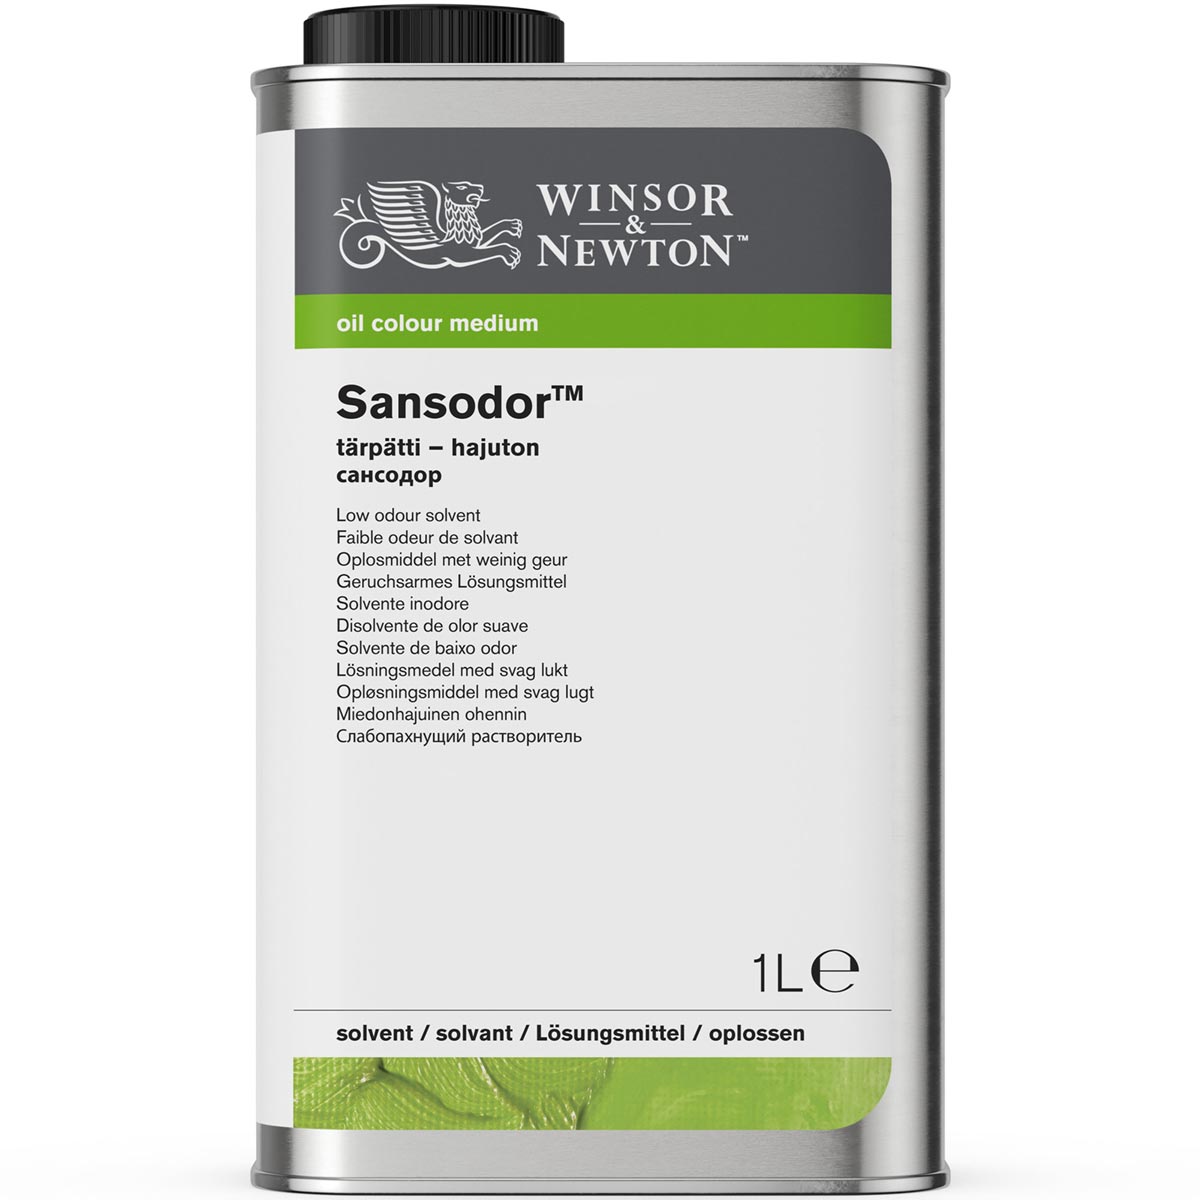 Winsor et Newton - Sansodor Low Odor Solvent Cleaner - 1 litre